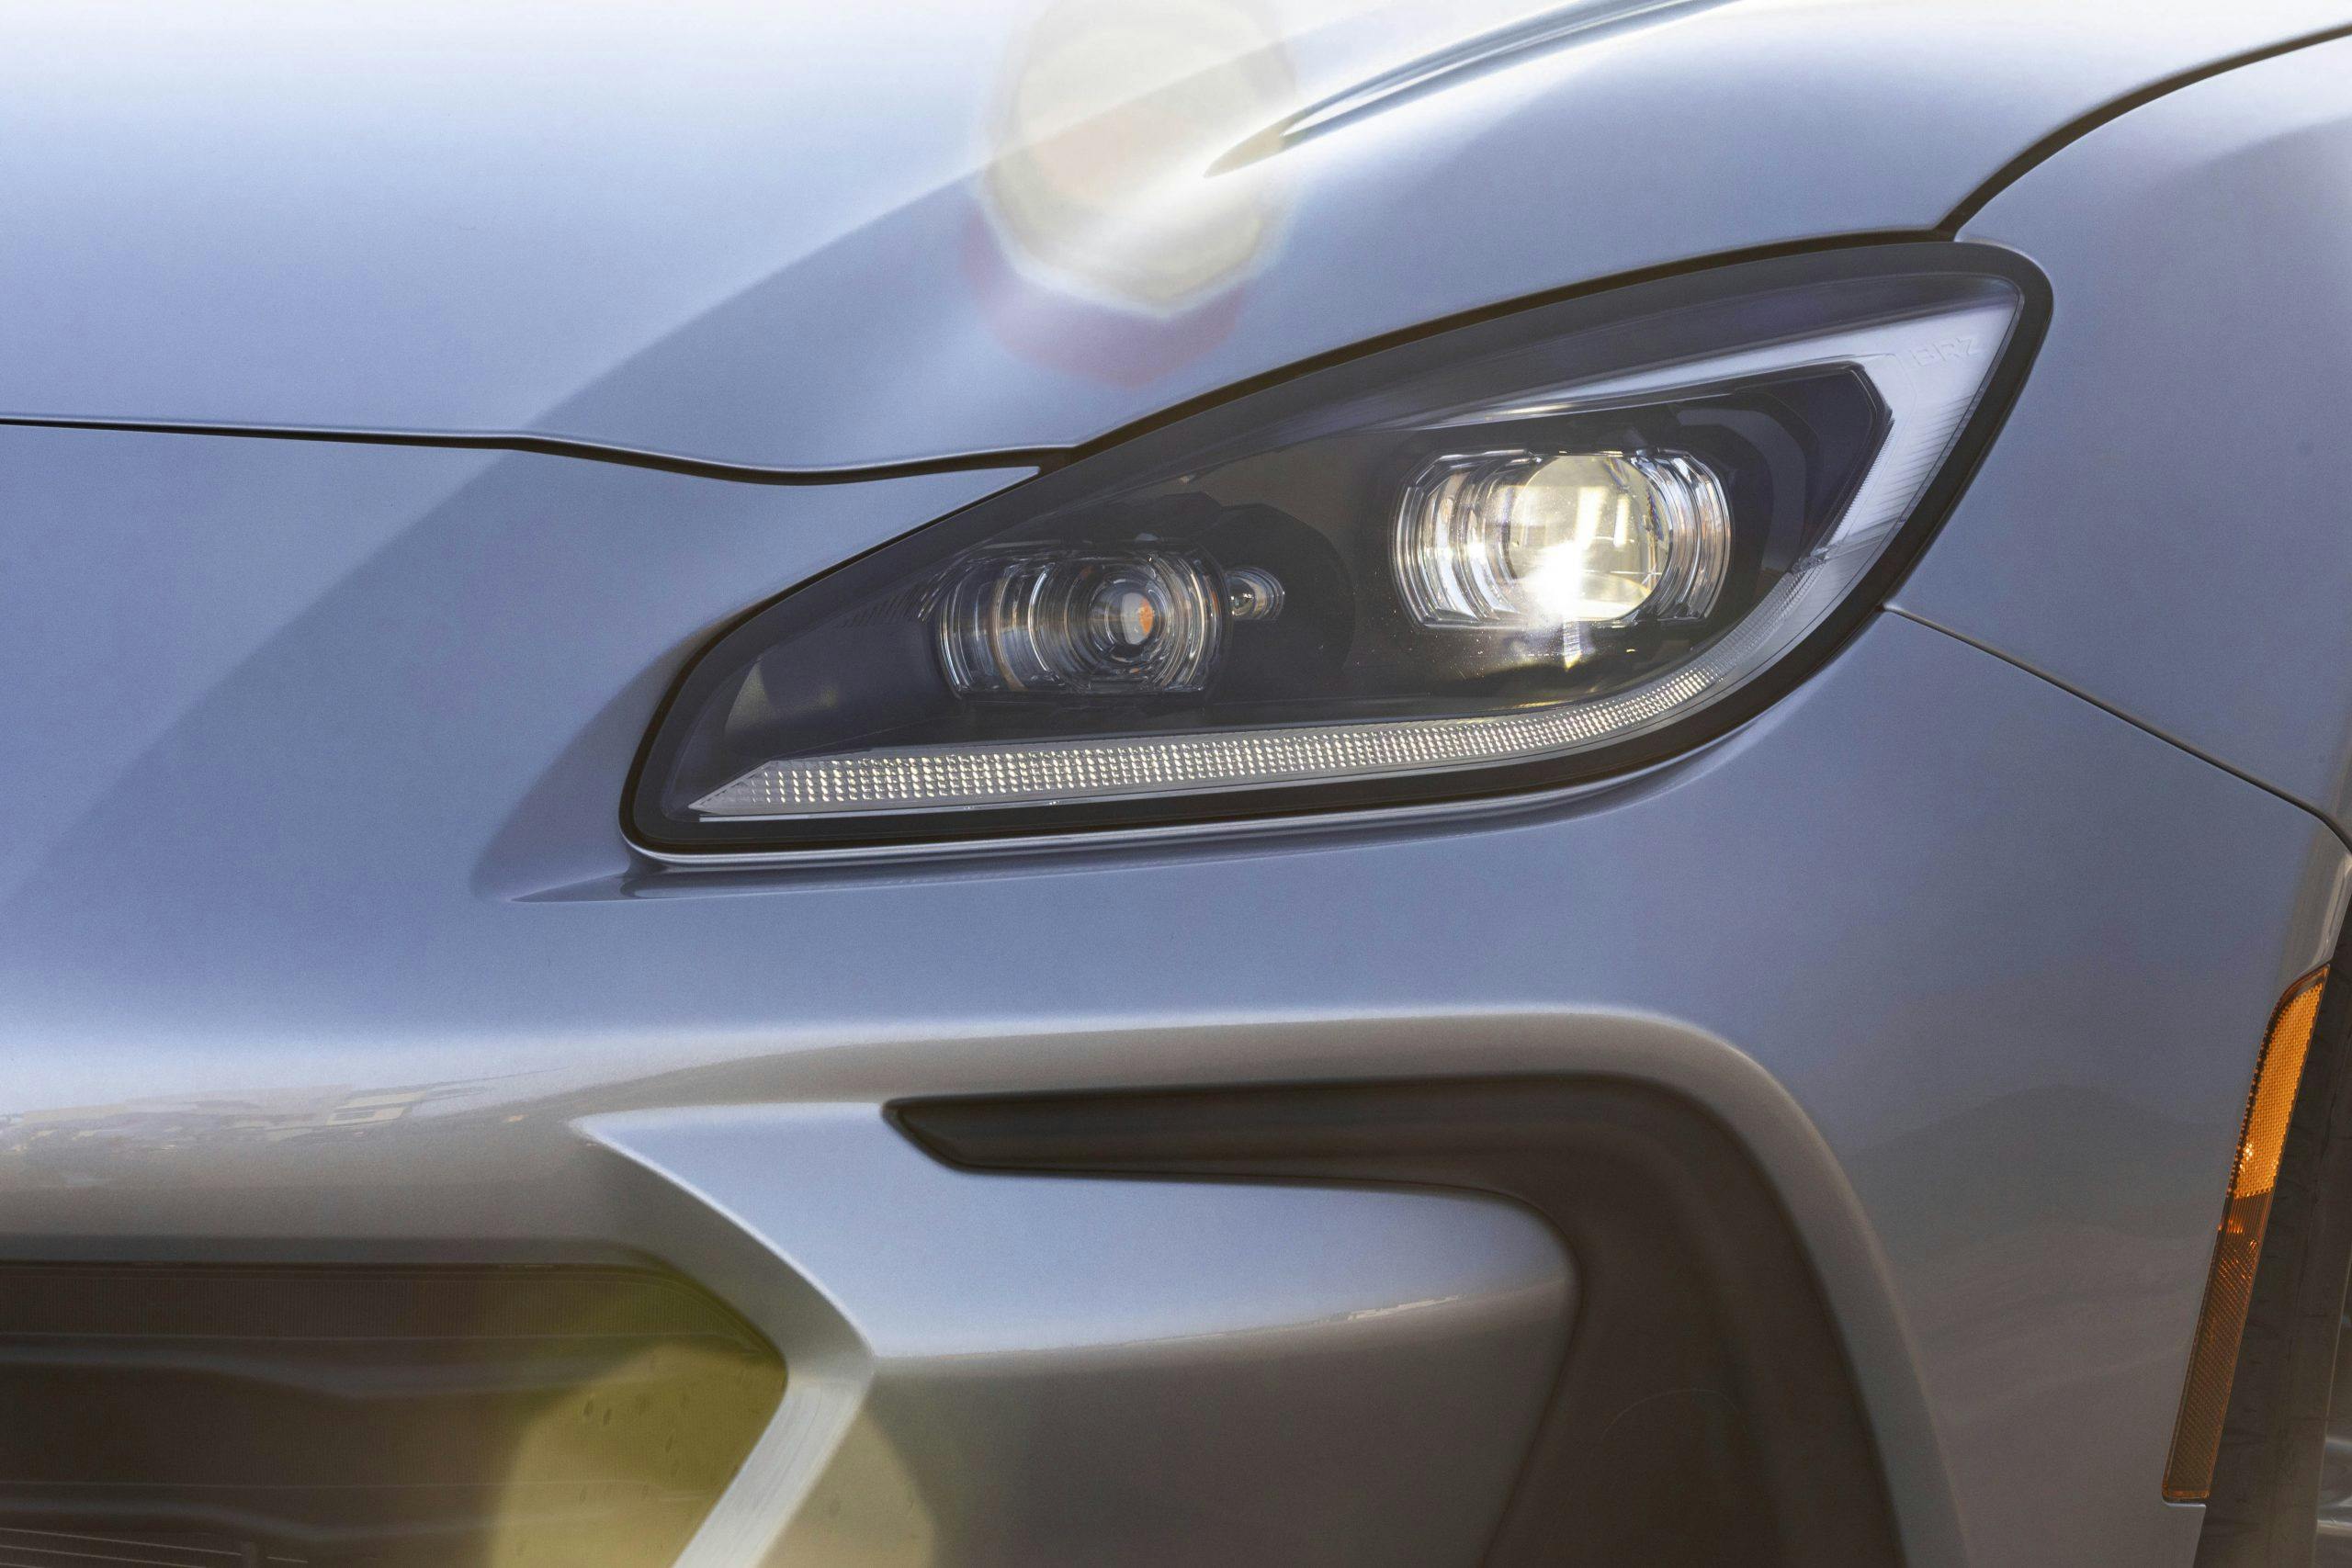 New 2022 Subaru BRZ headlight detail